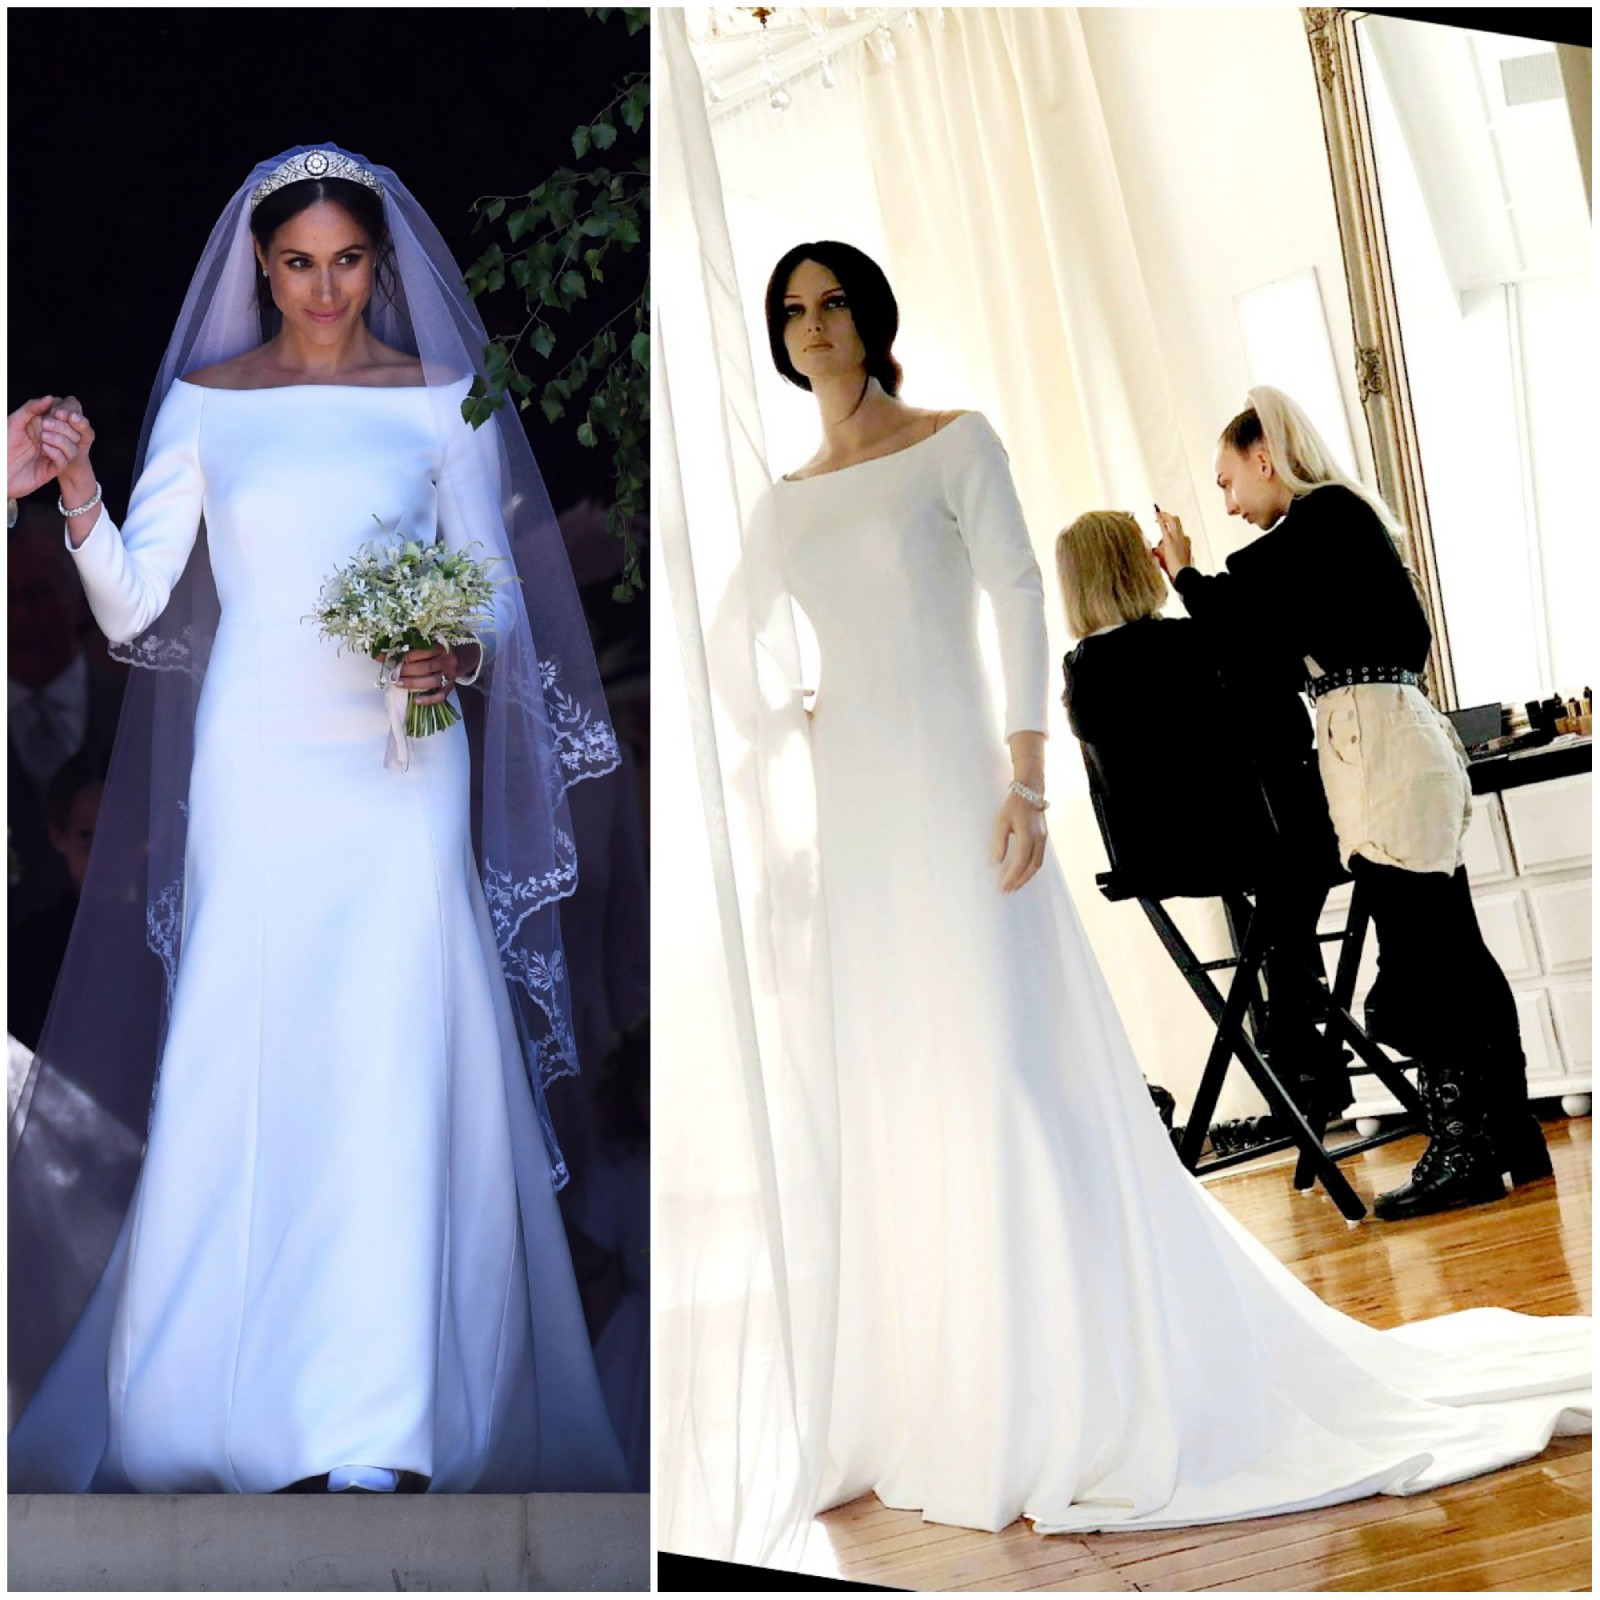 Rhonda Hemmingway Meghan Markle replica New Wedding Dress